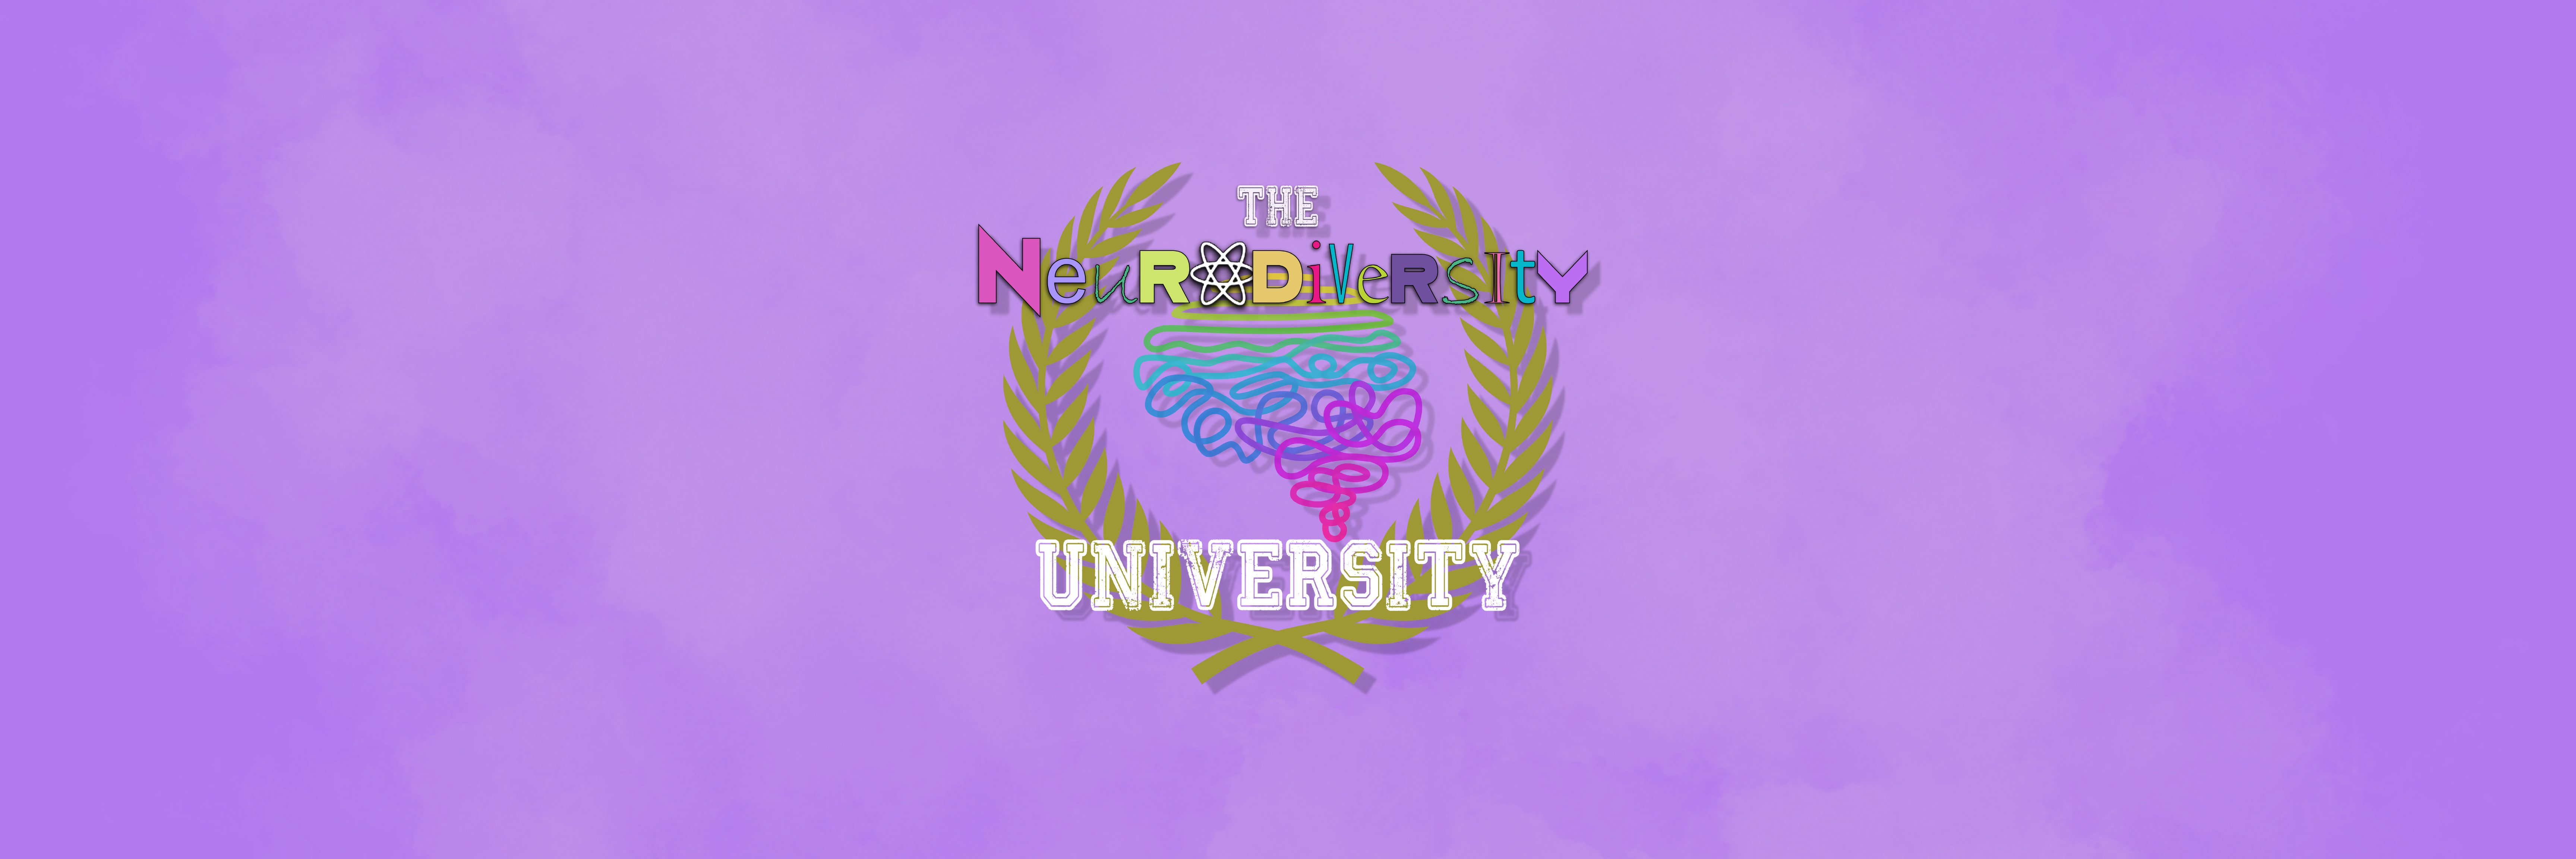 The Neurodiversity University Logo